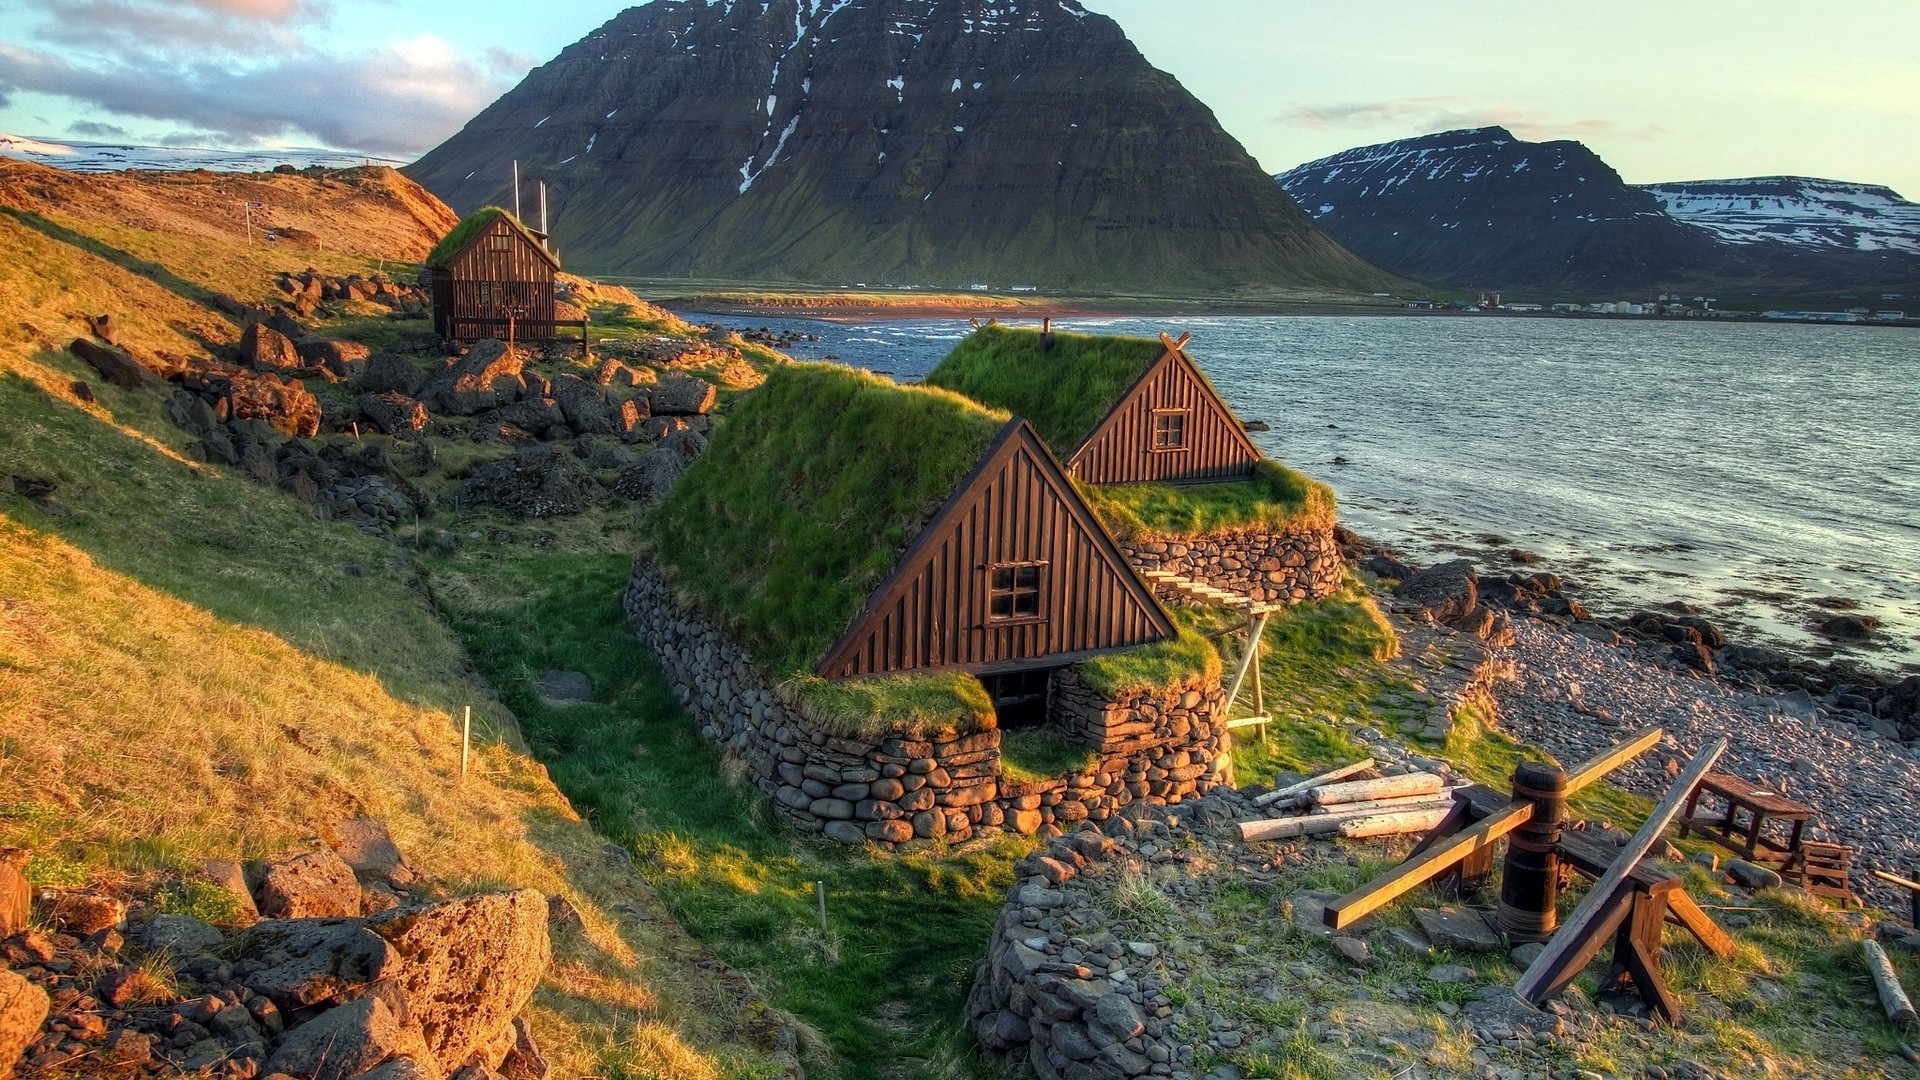 Iceland Lake Landscape for 1920 x 1080 HDTV 1080p resolution